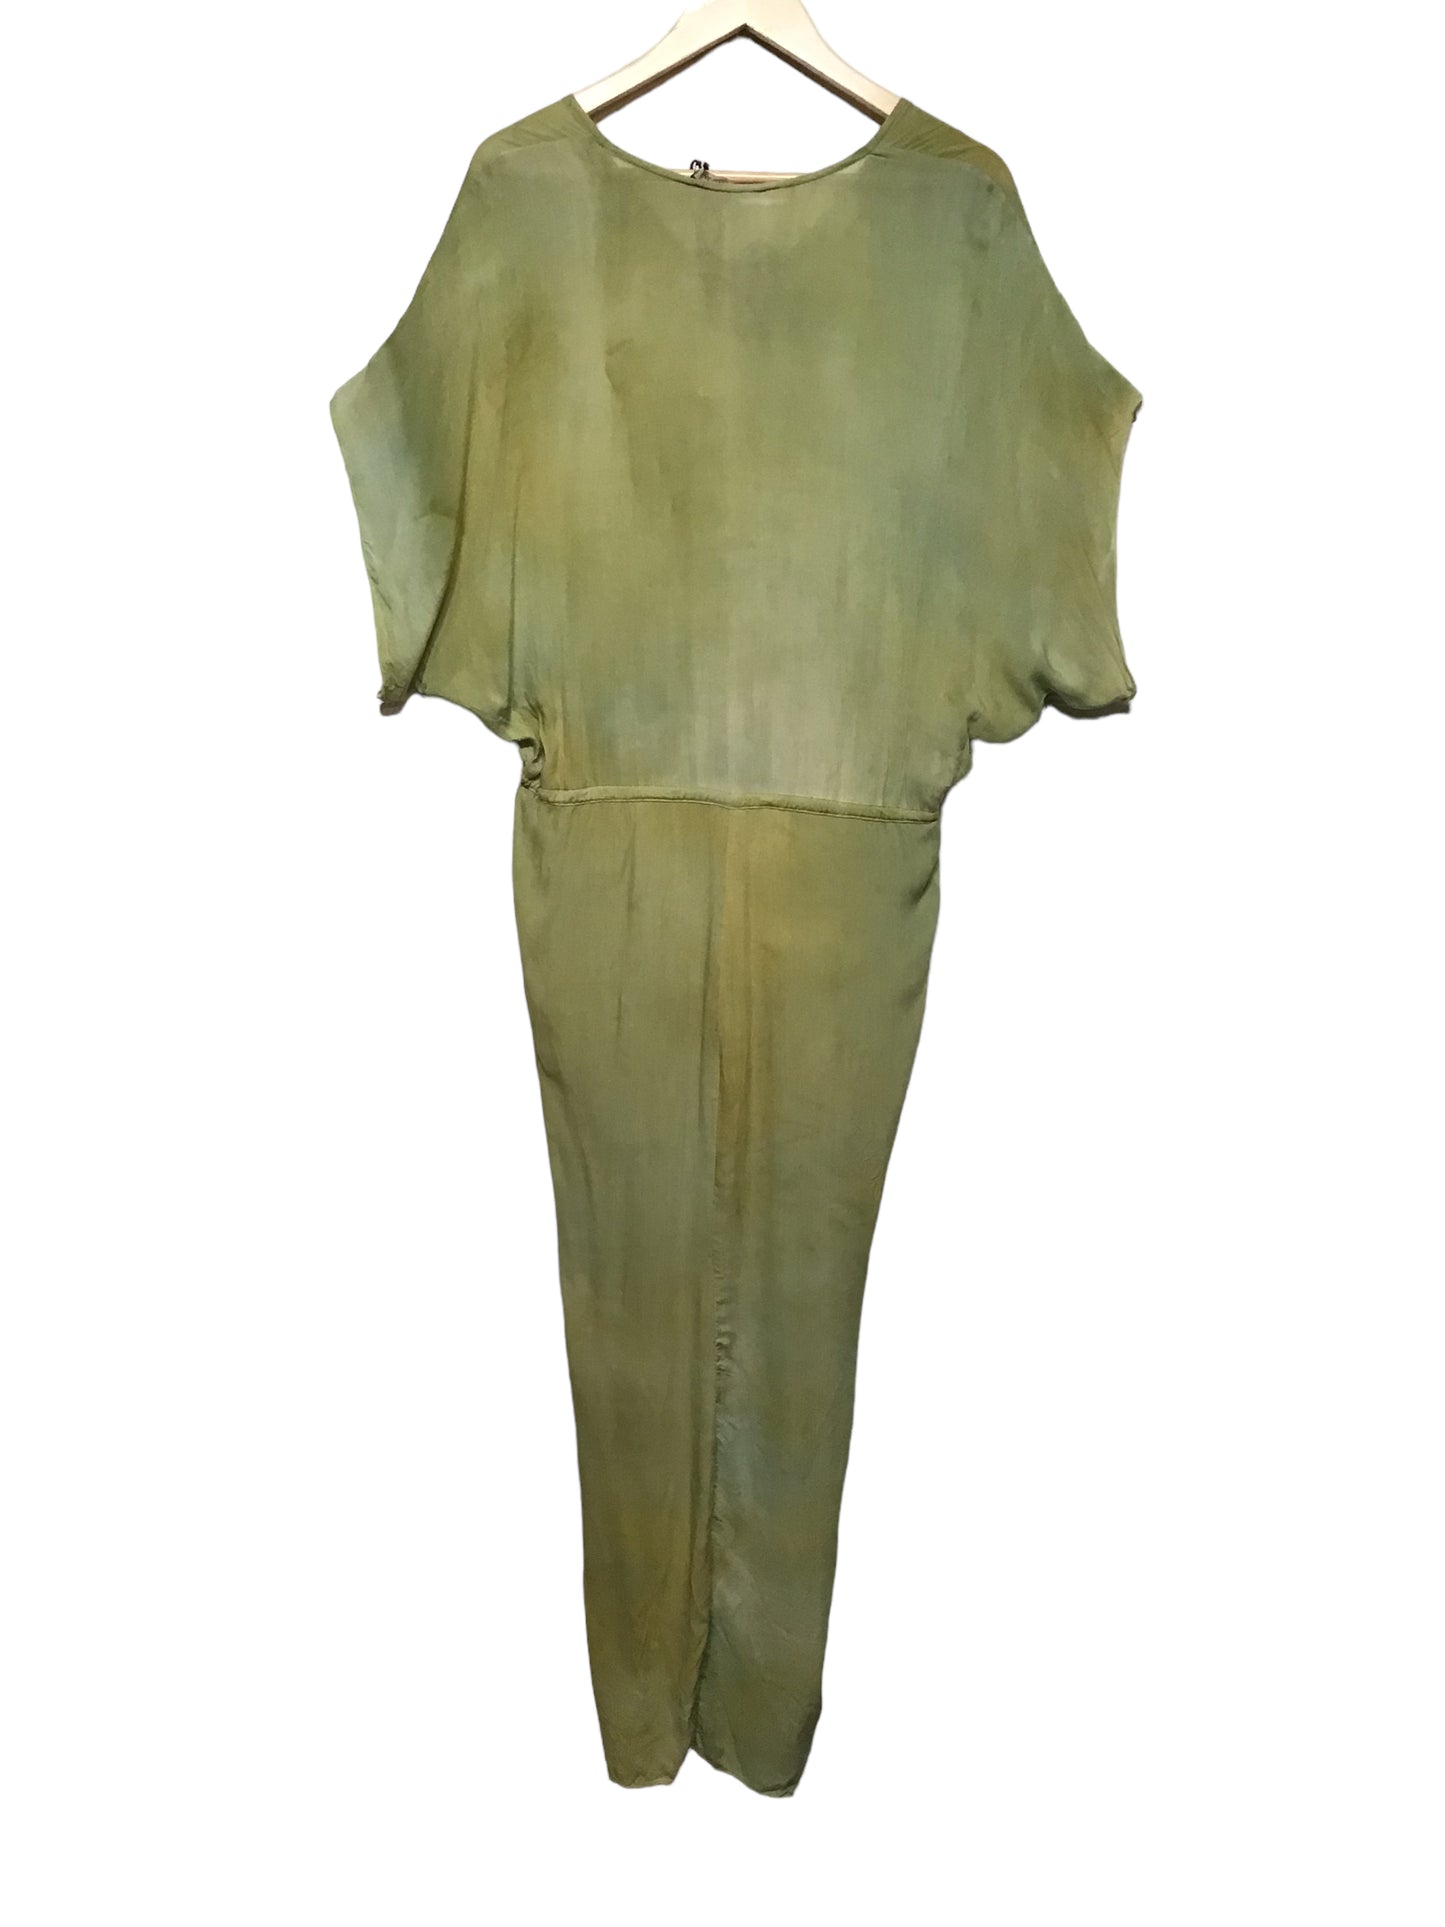 Rabens Saloner Dress (Size S/M)